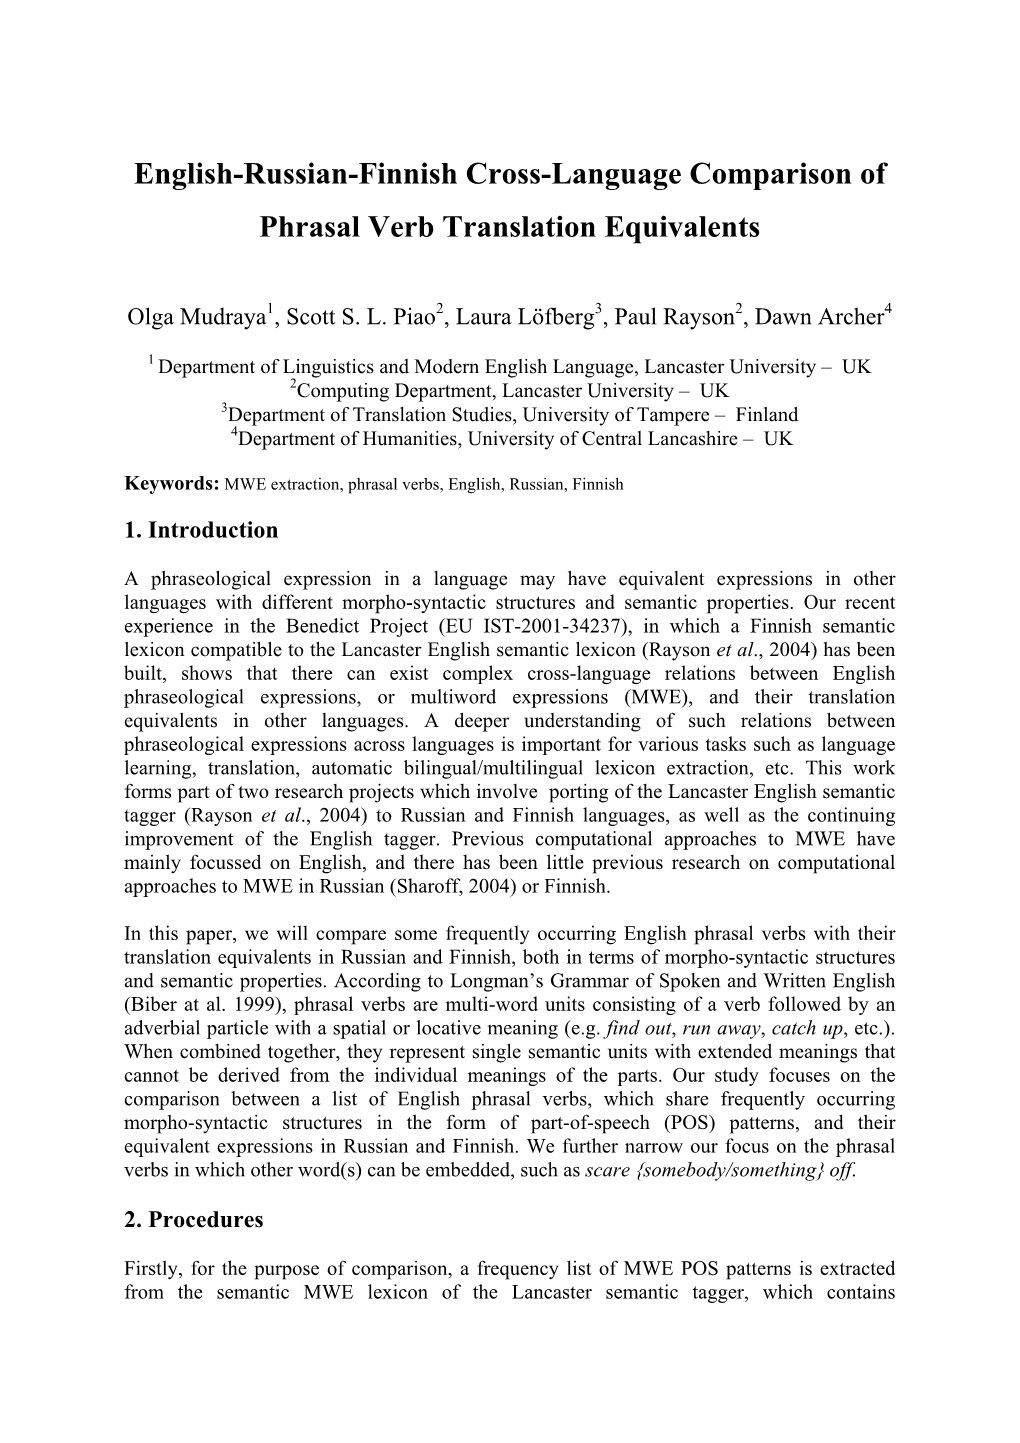 English-Russian-Finnish Cross-Language Comparison of Phrasal Verb Translation Equivalents